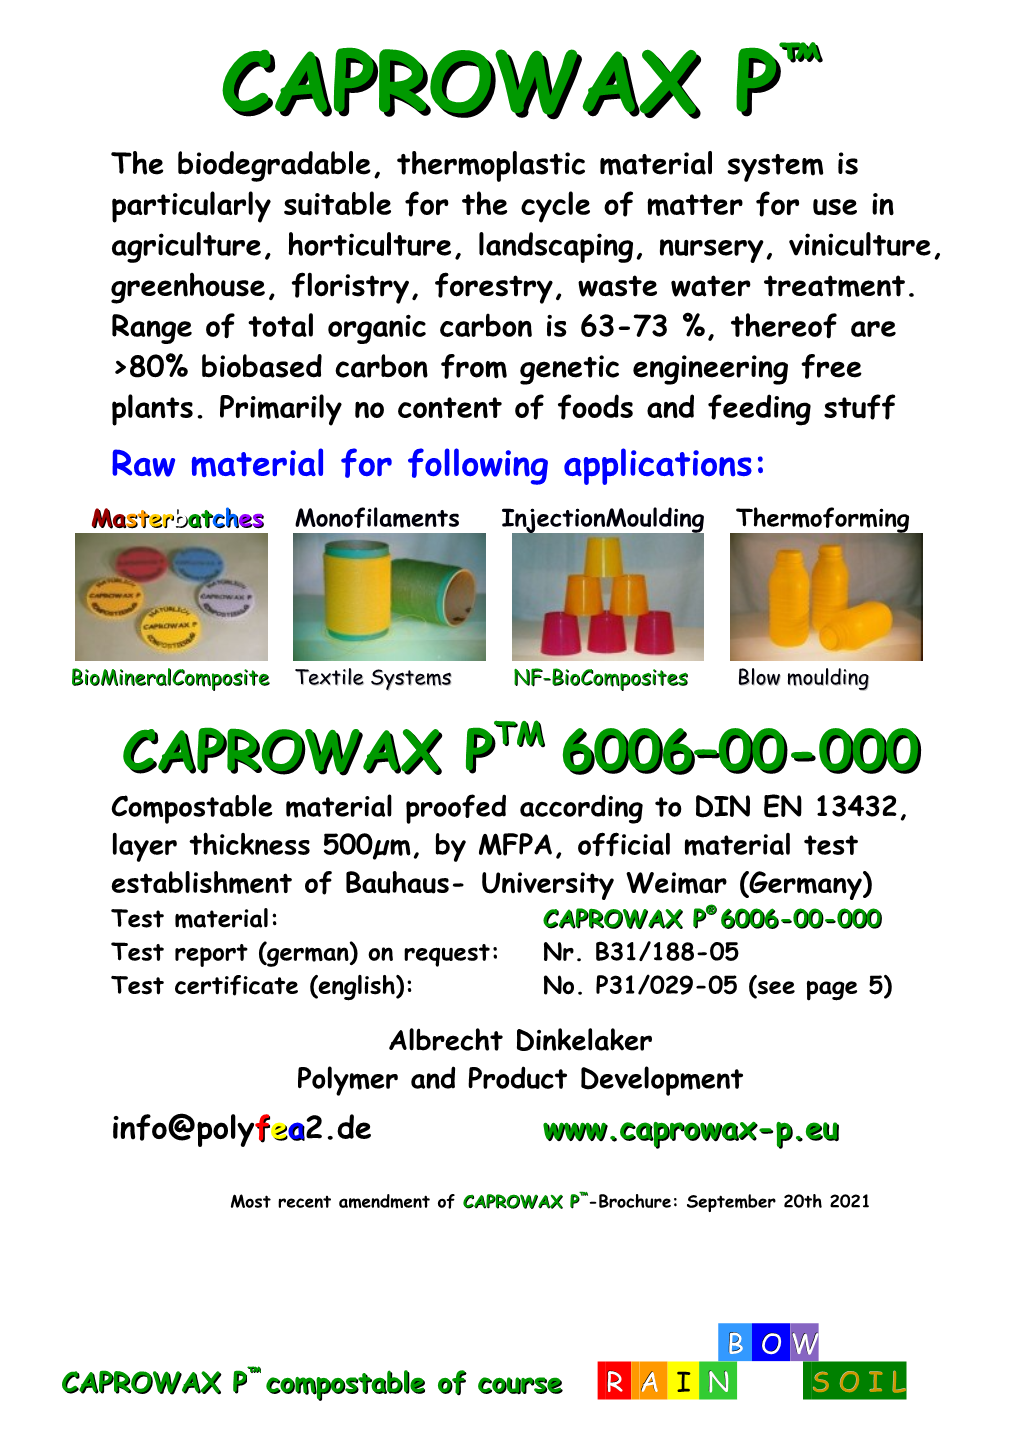 CAPROWAX P™-Brochure: September 20Th 2021